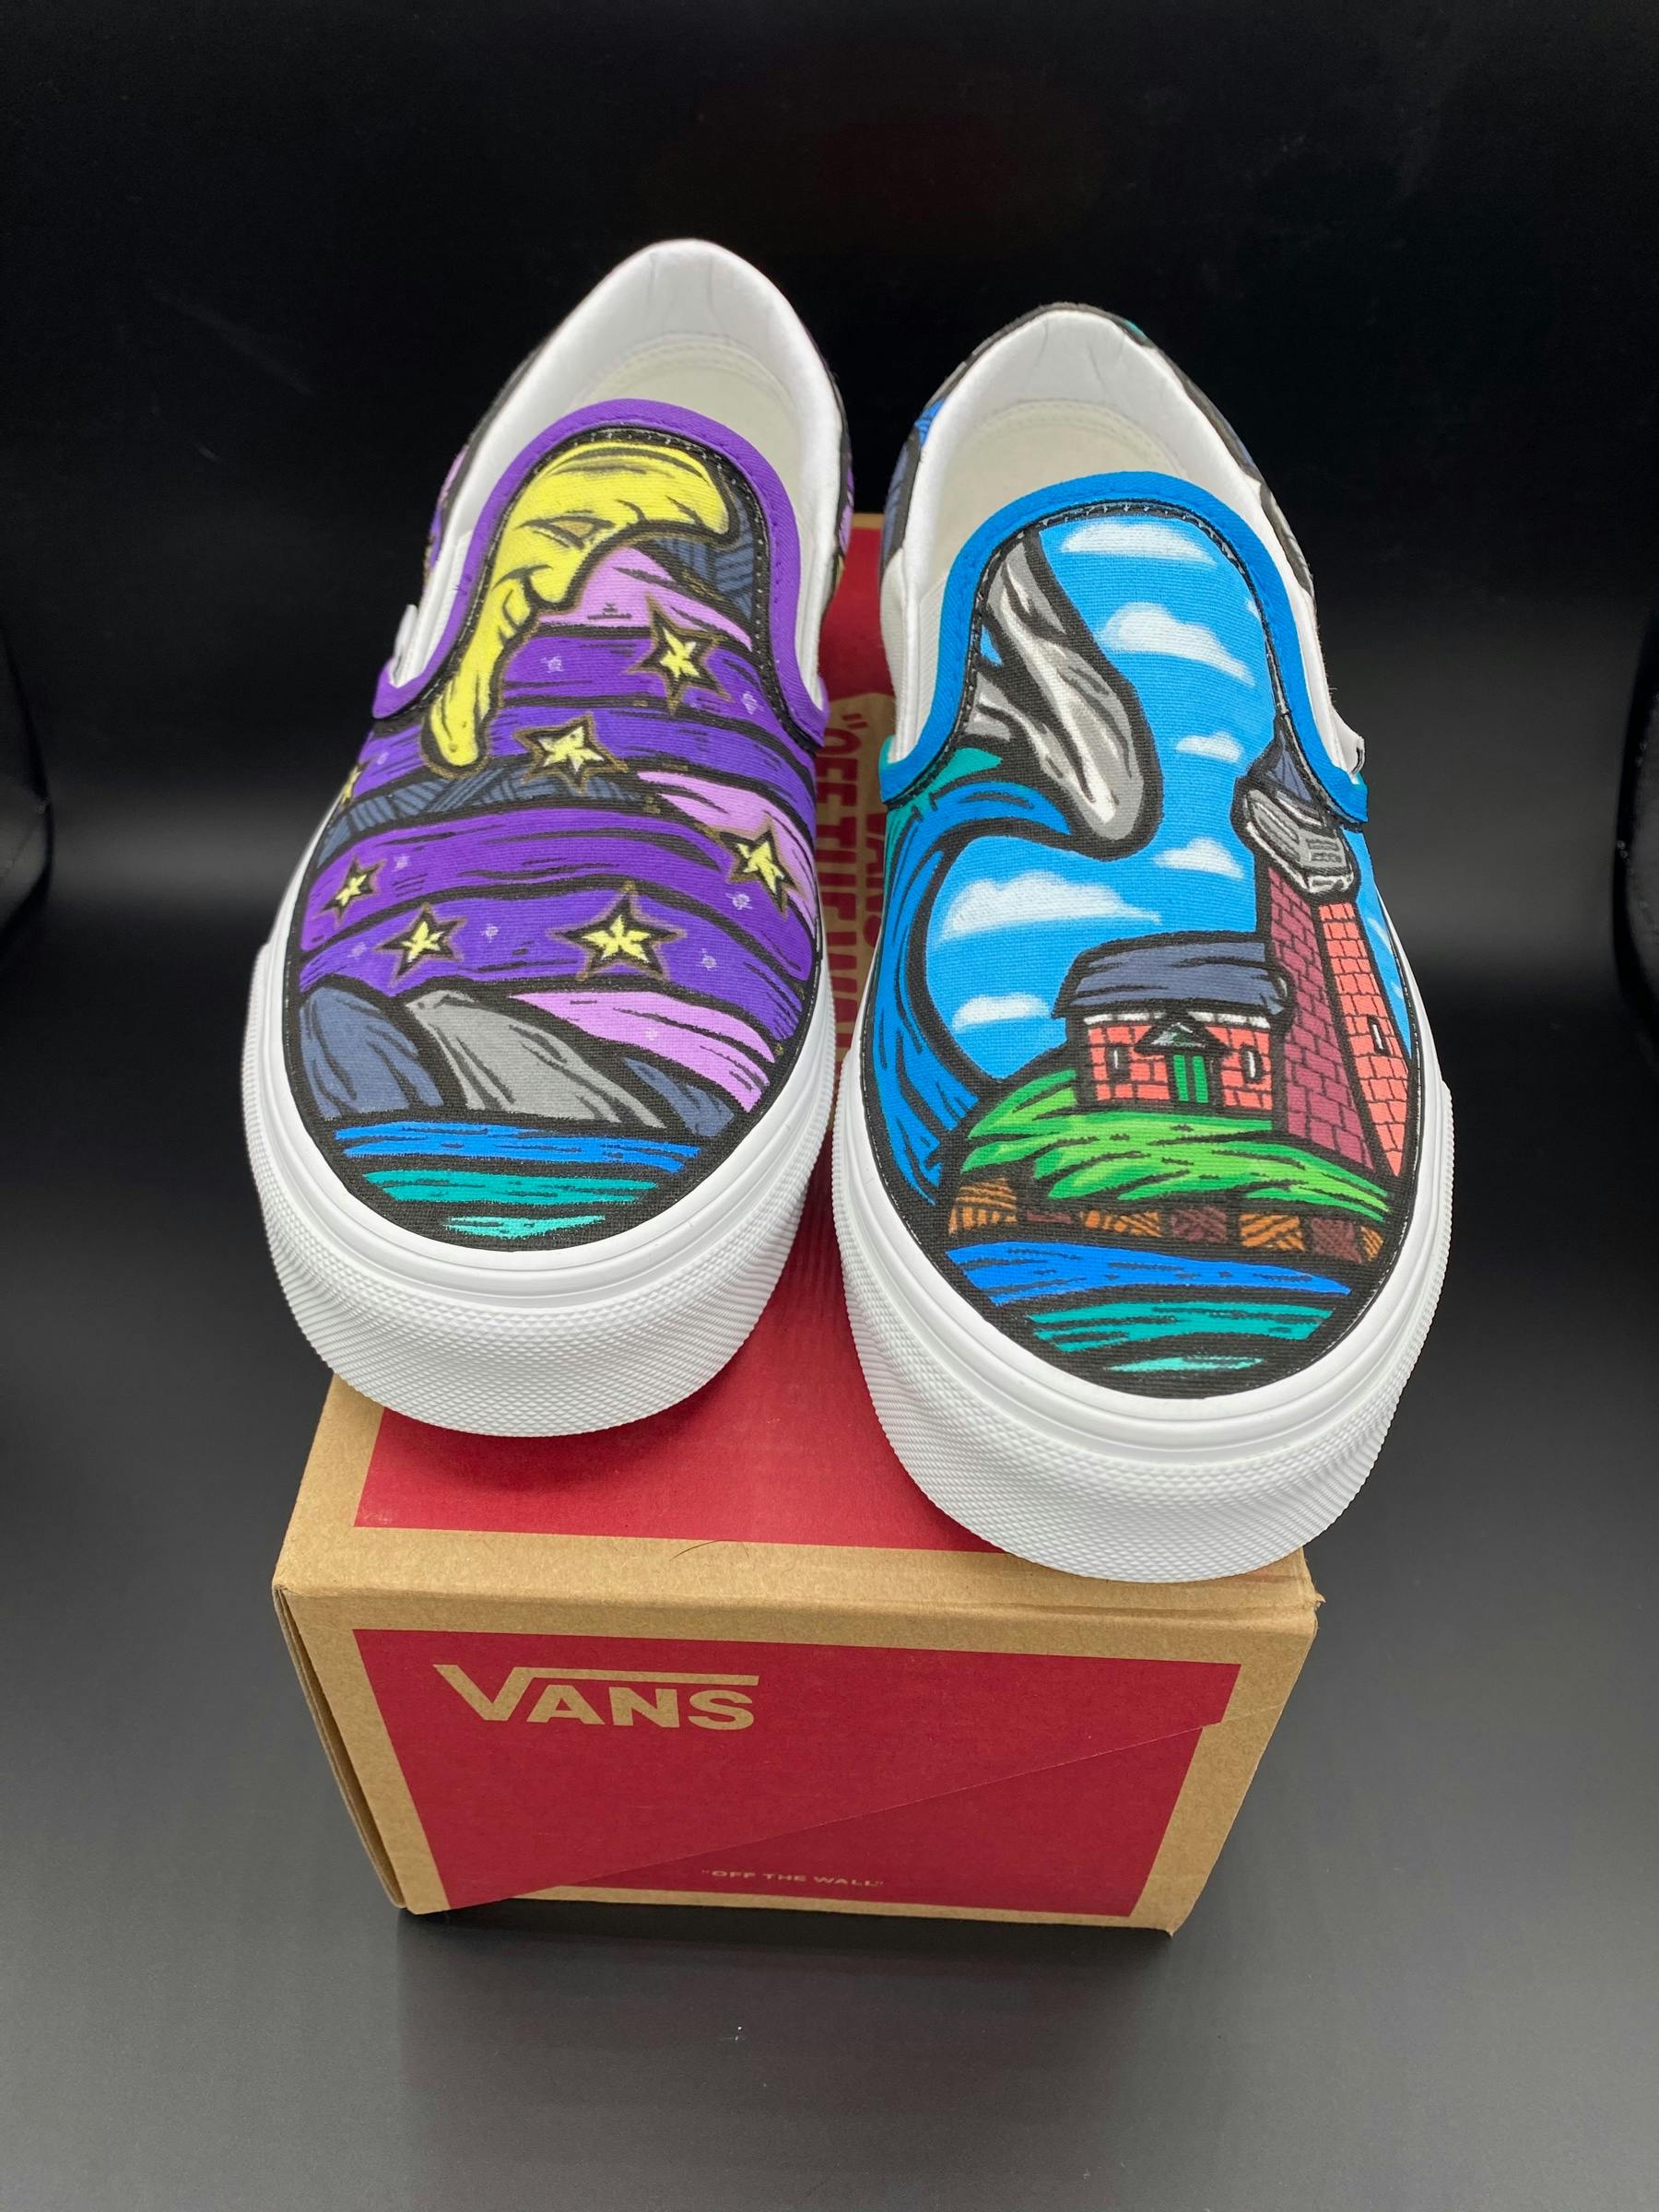 Artwork on Vans Shoes by Jason "Willz" Williams from Santa Cruz, CA